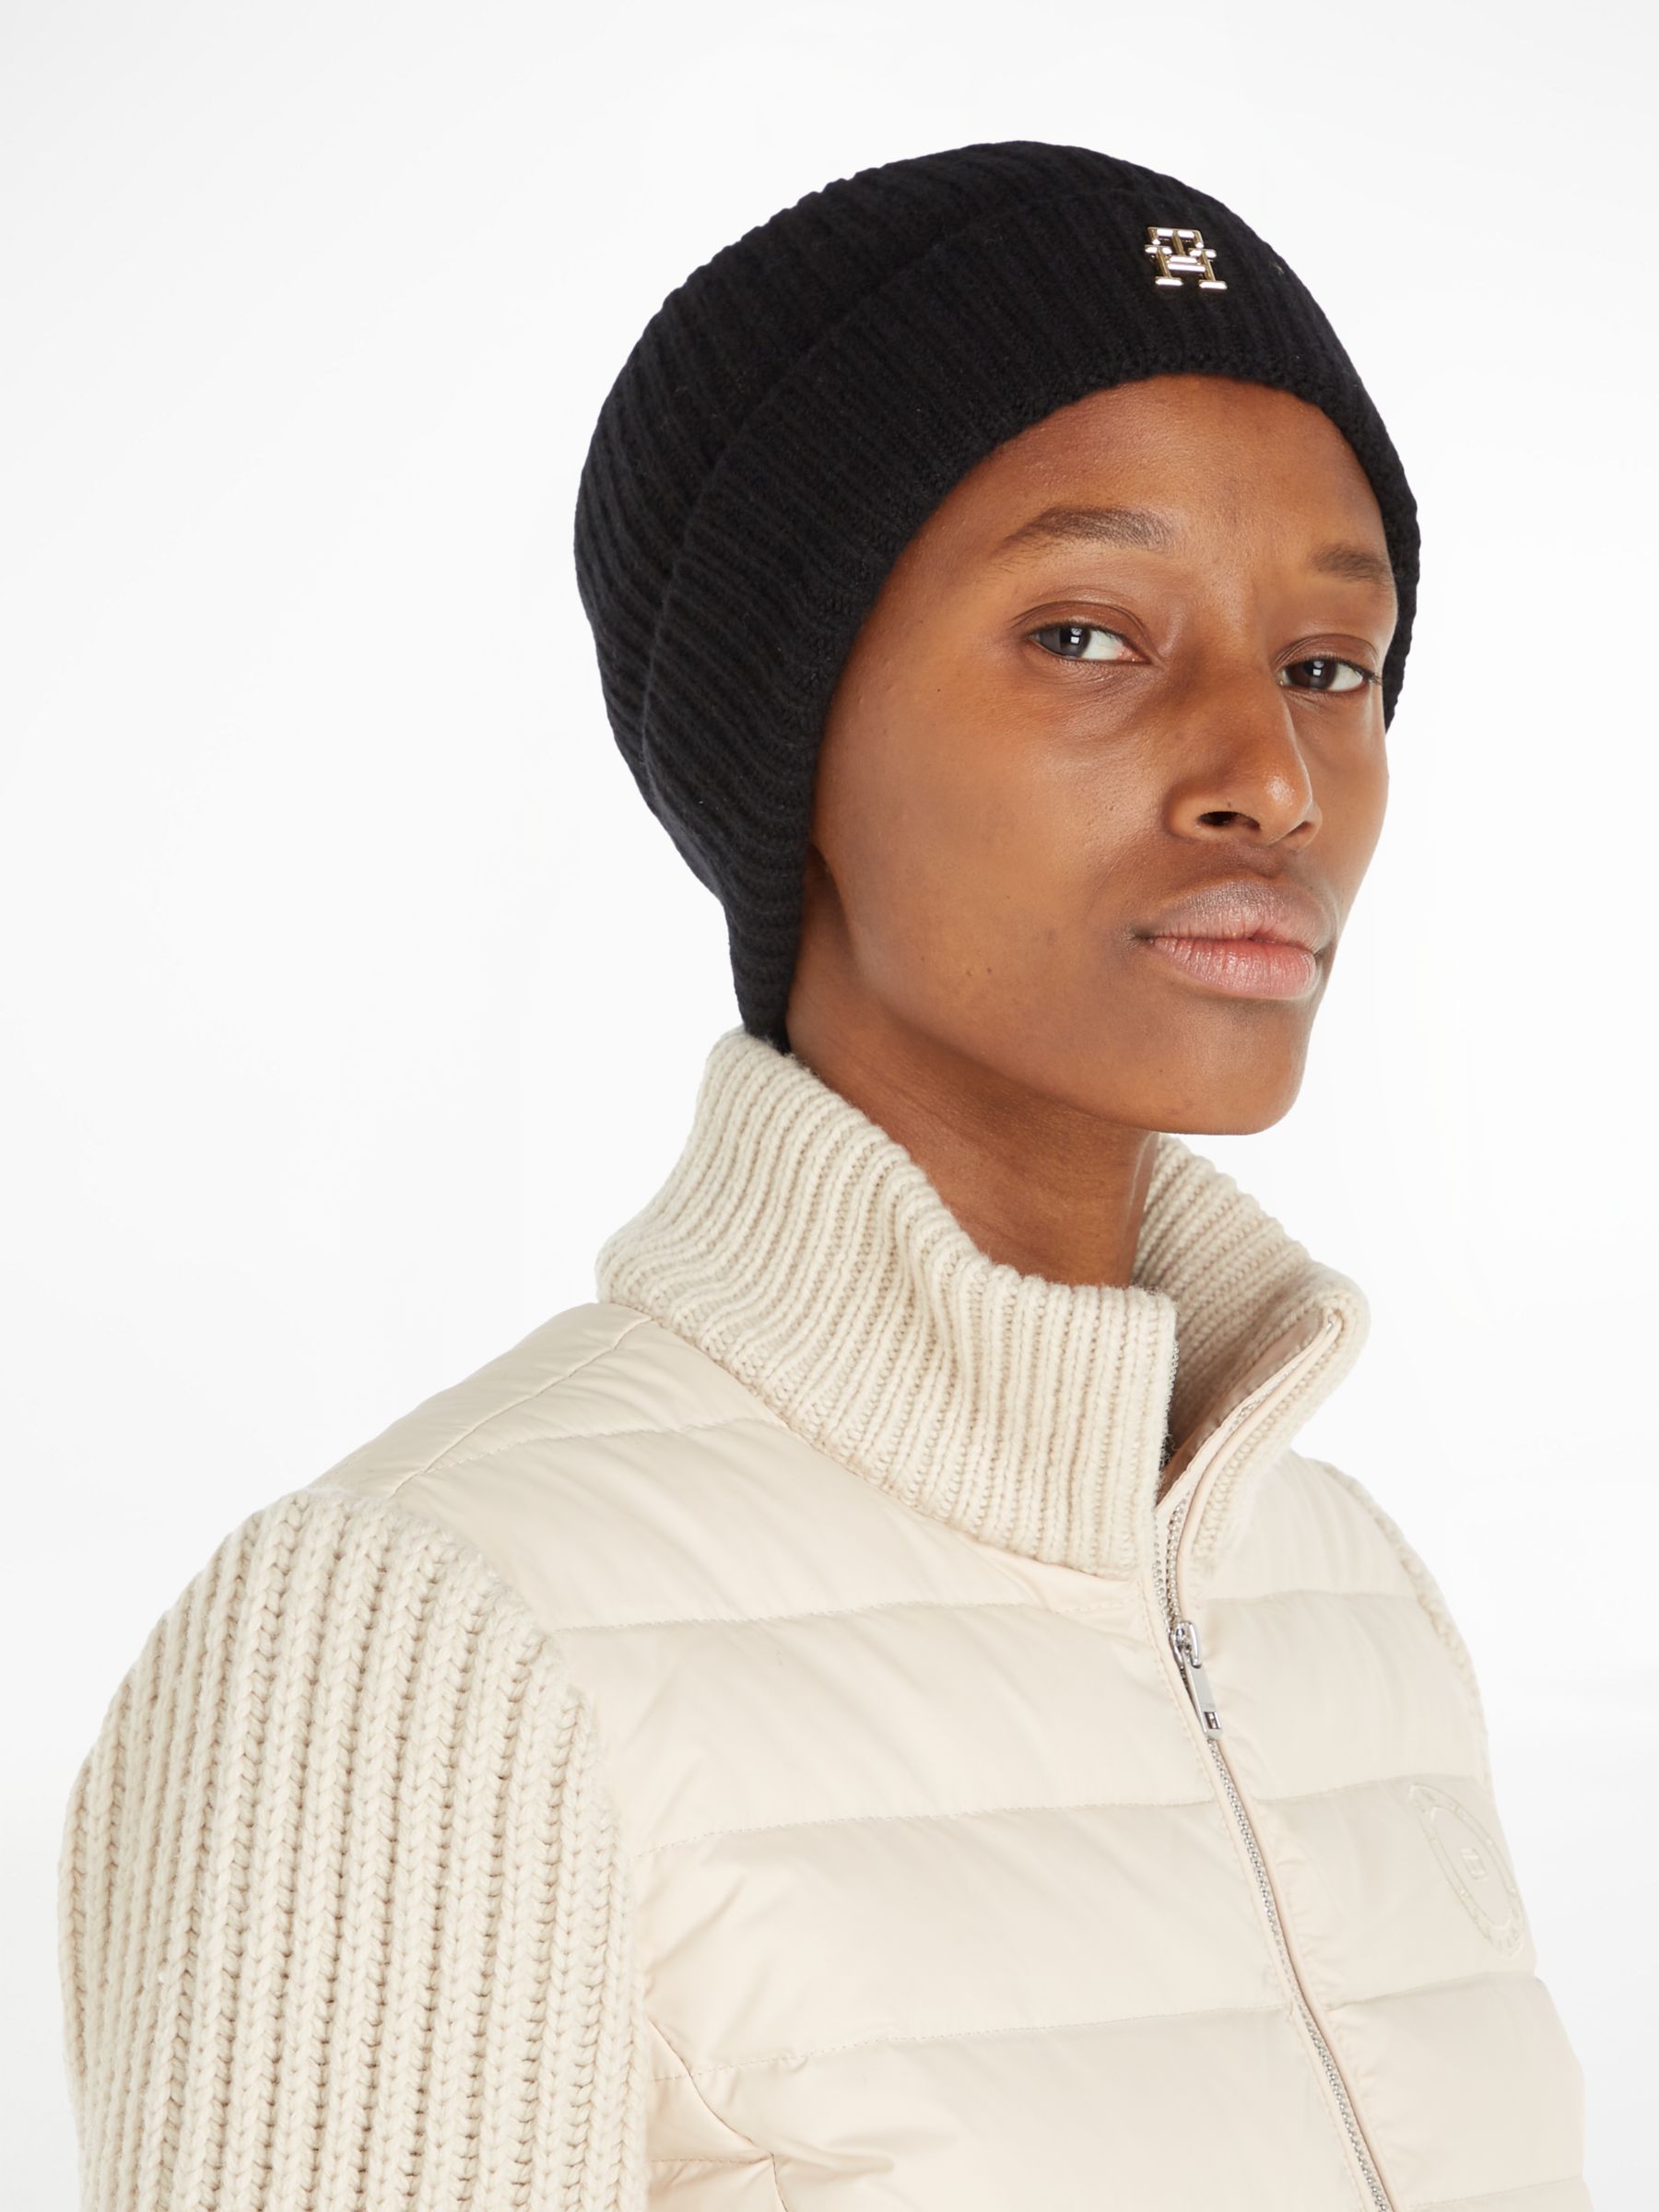 Louis Vuitton Knitted Hat Cashmere Brown Monogram Beanie u1070559862HA